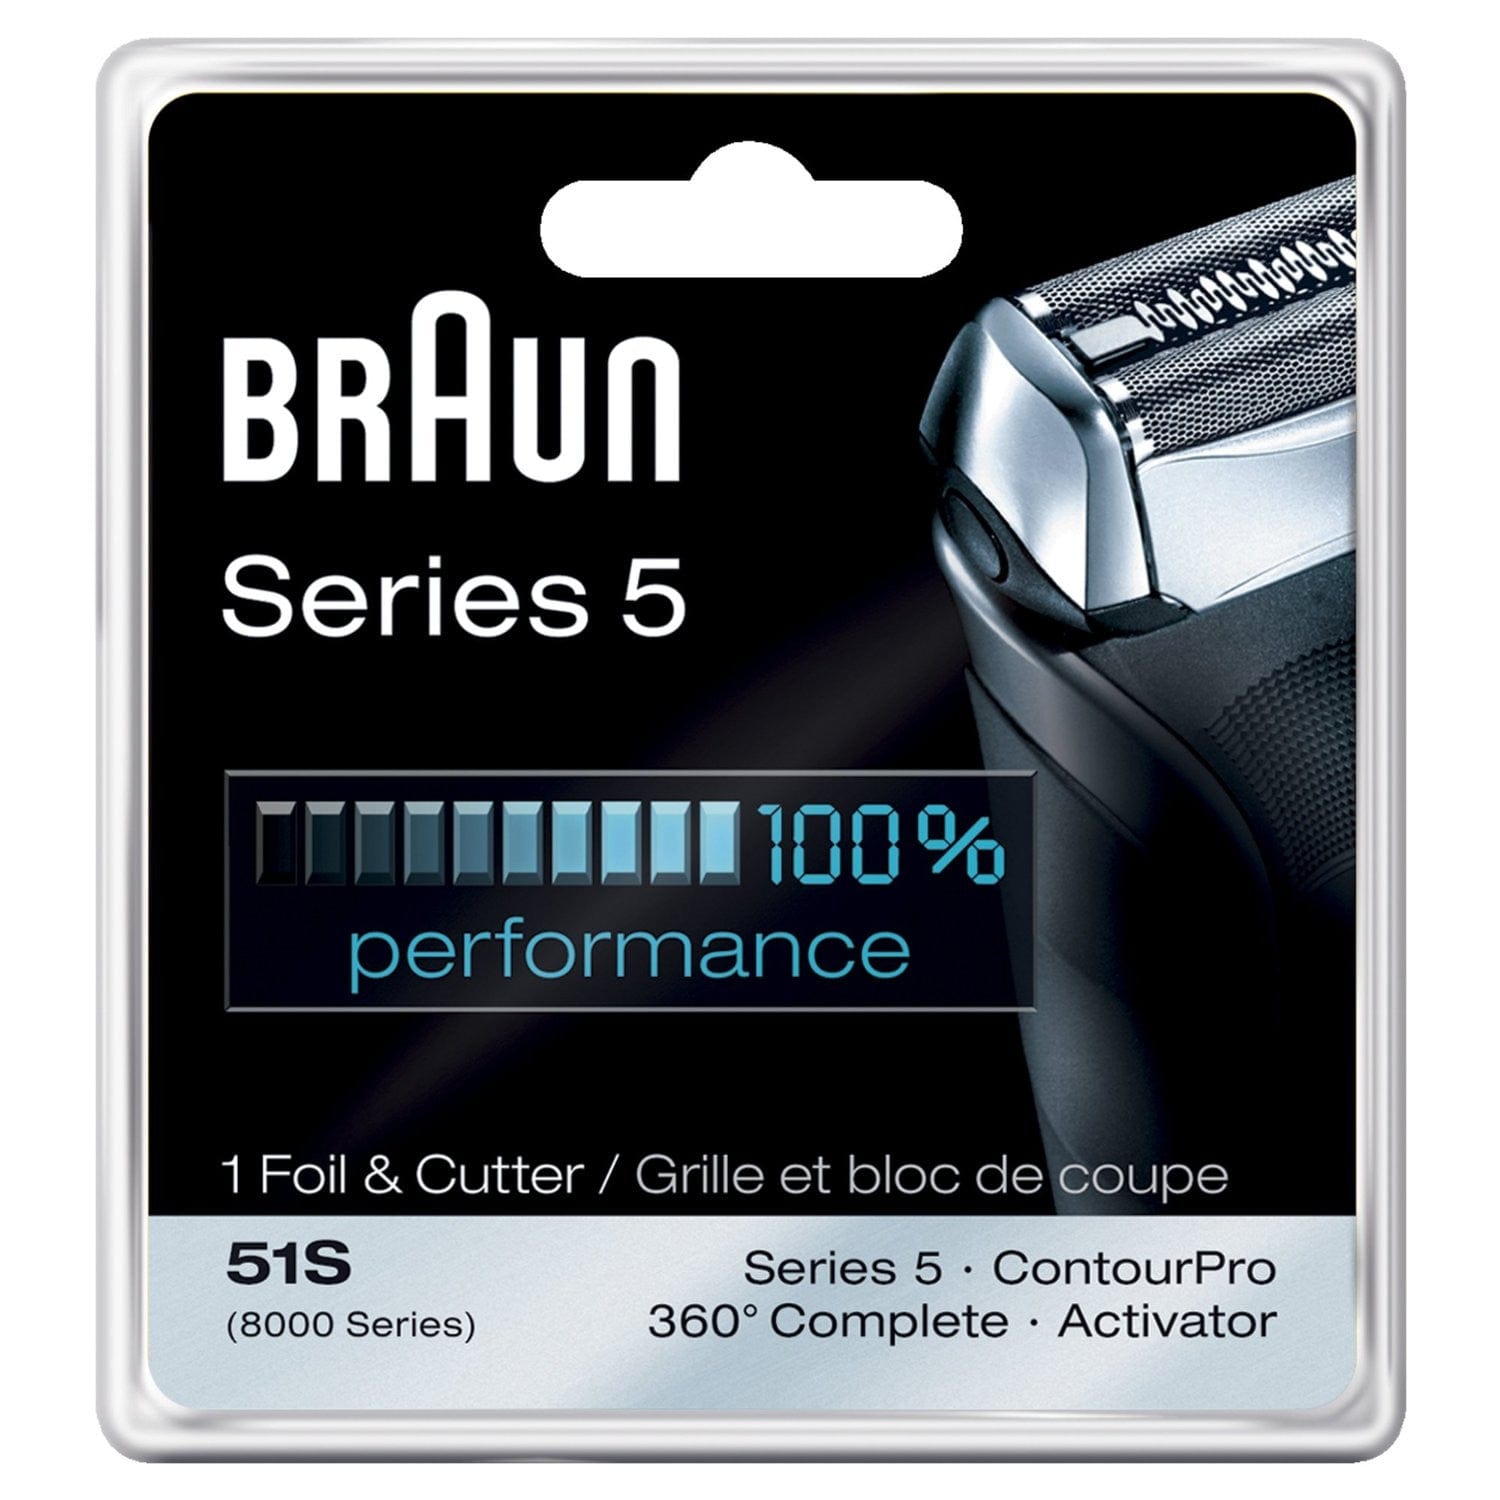 Braun Series 5 Foil & Cutter 51S ContourPro, 360 Complete